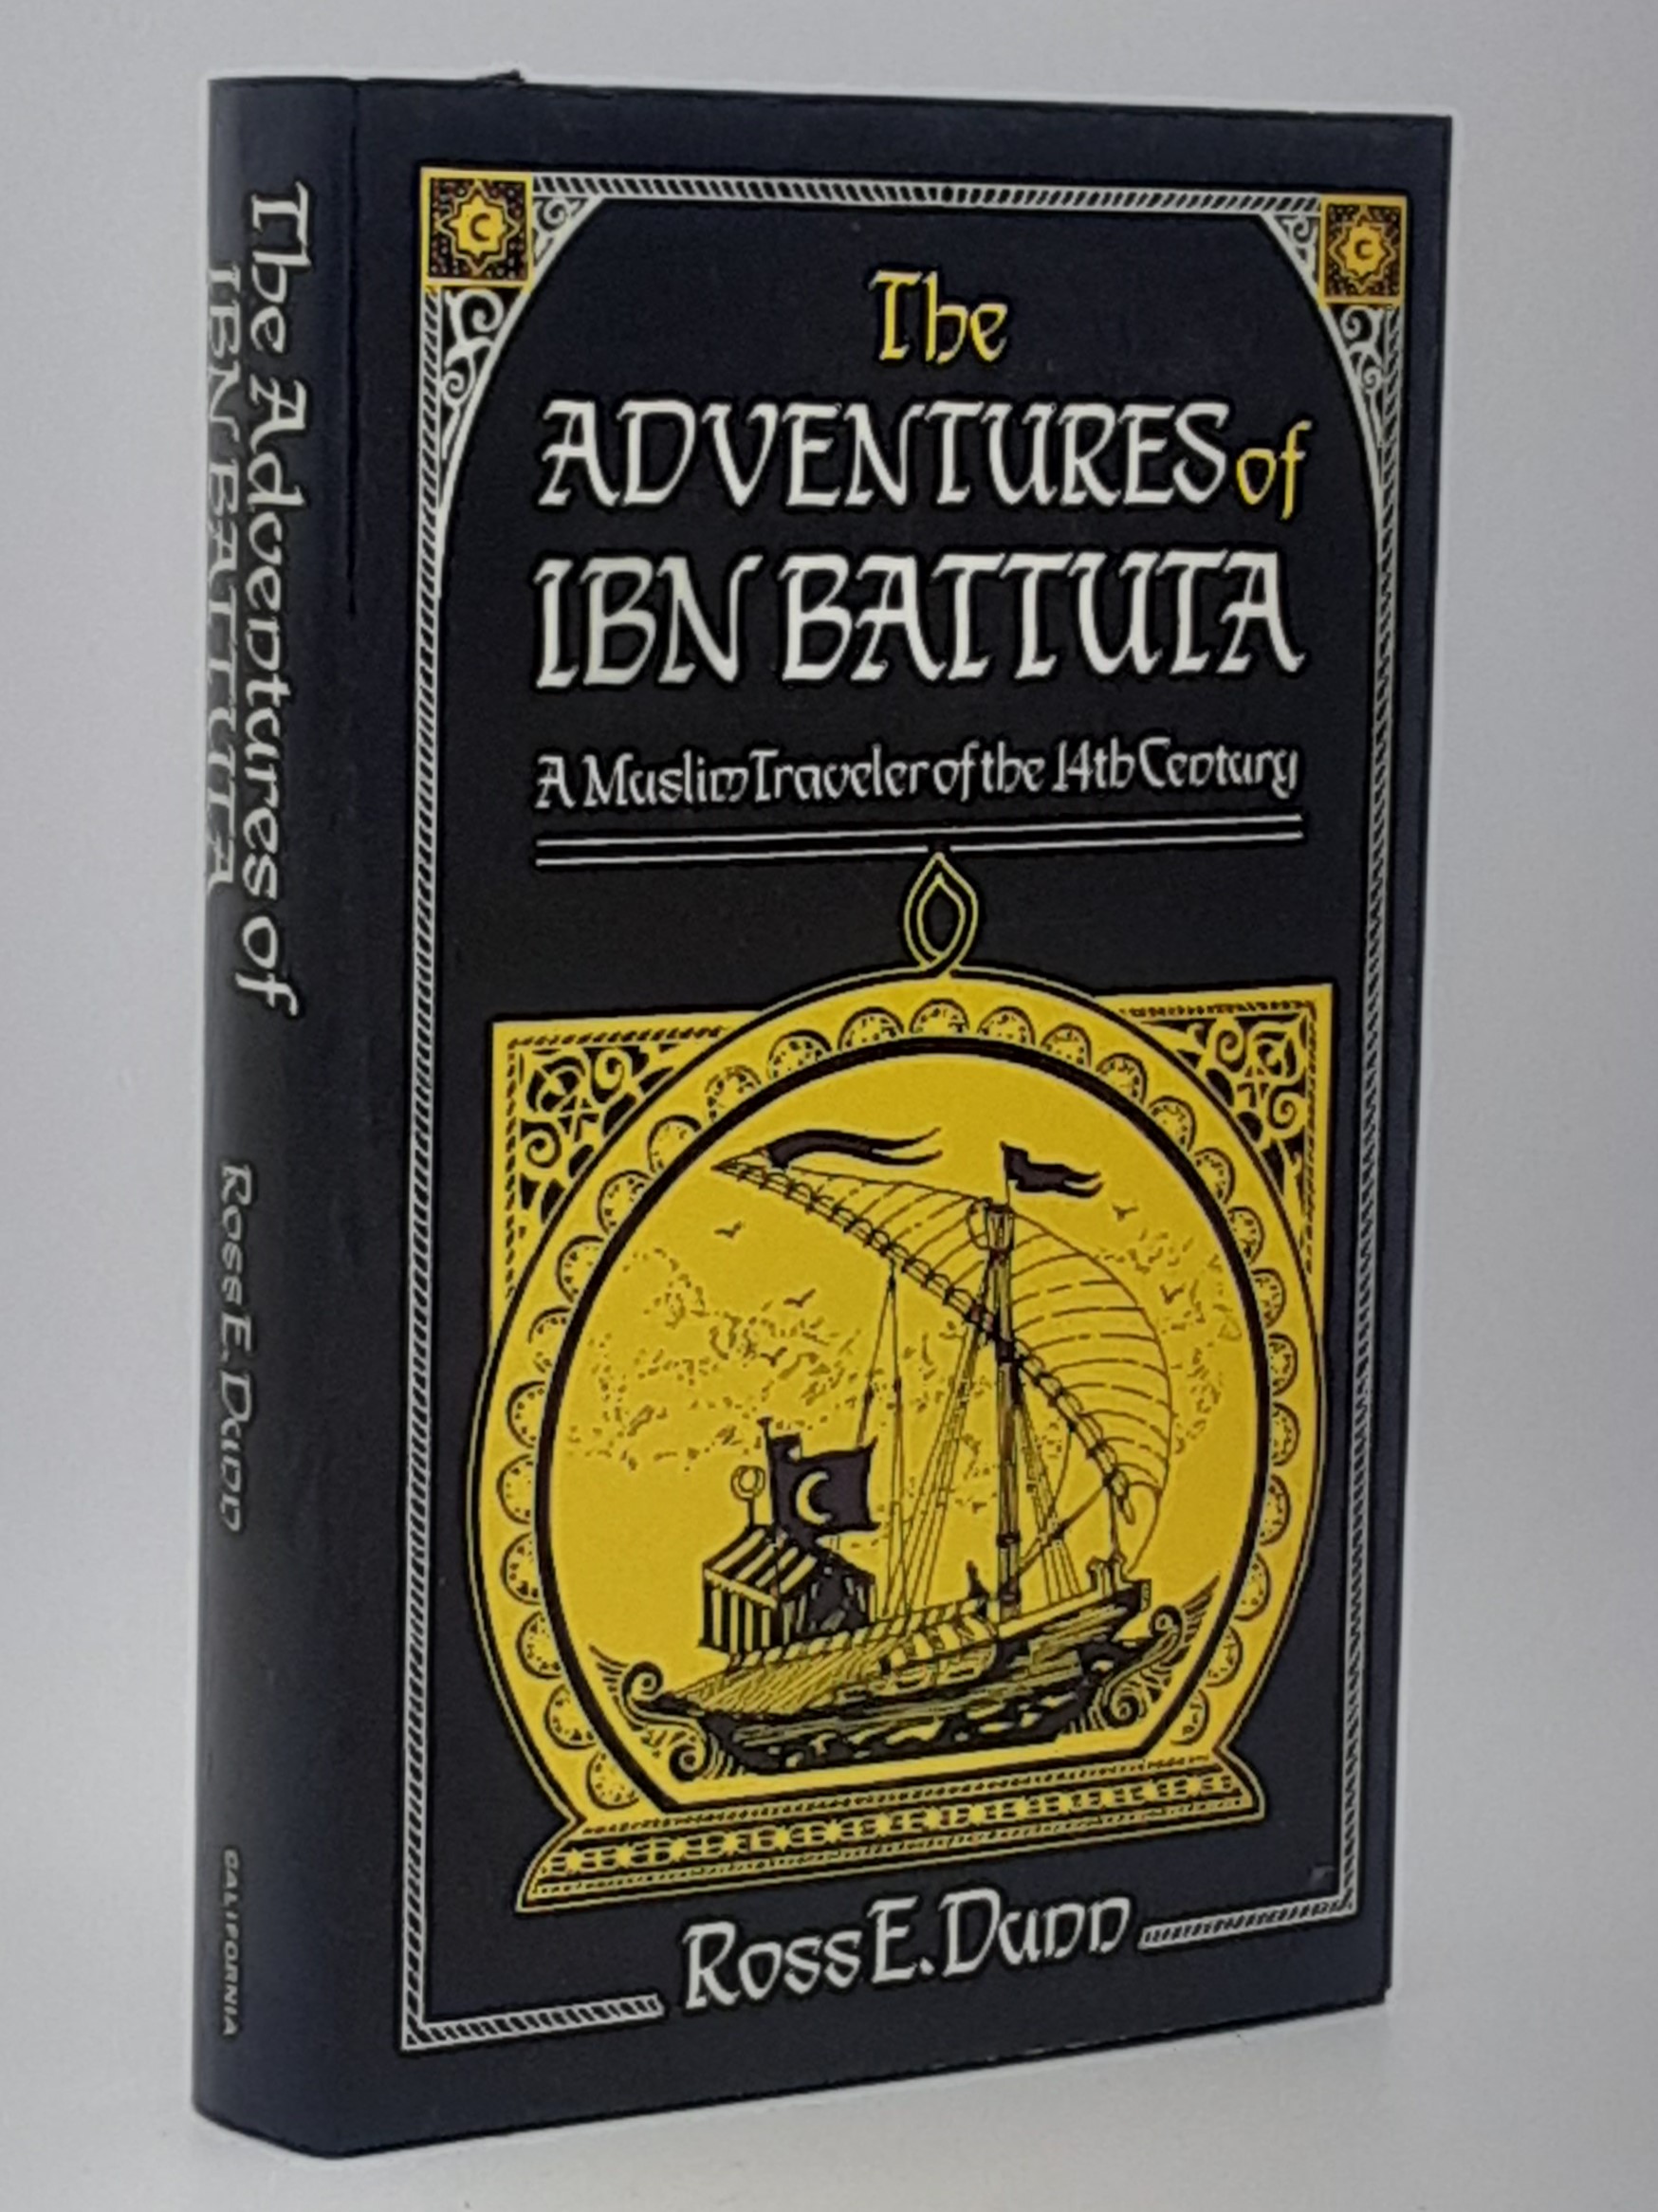 The Adventures of Ibn Battuta: A Muslim Traveler of the 14th Century. - Dunn, Ross E.